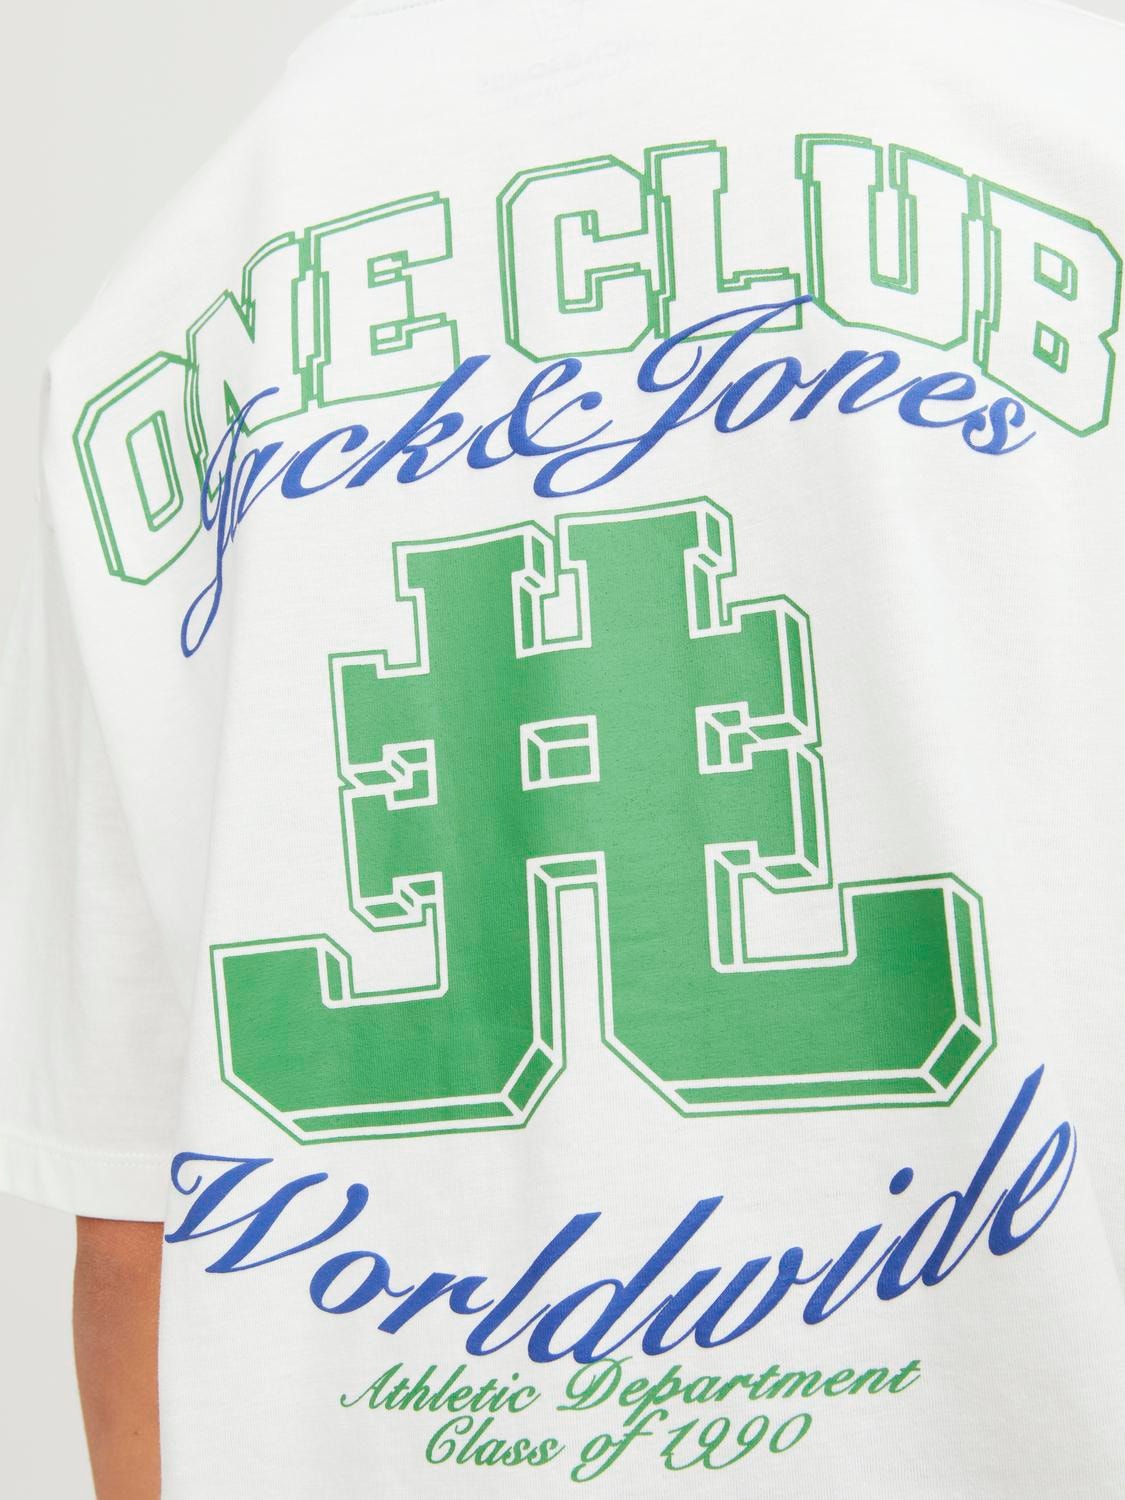 Jack & Jones T-shirt Imprimé Mini -Cloud Dancer - 12257431